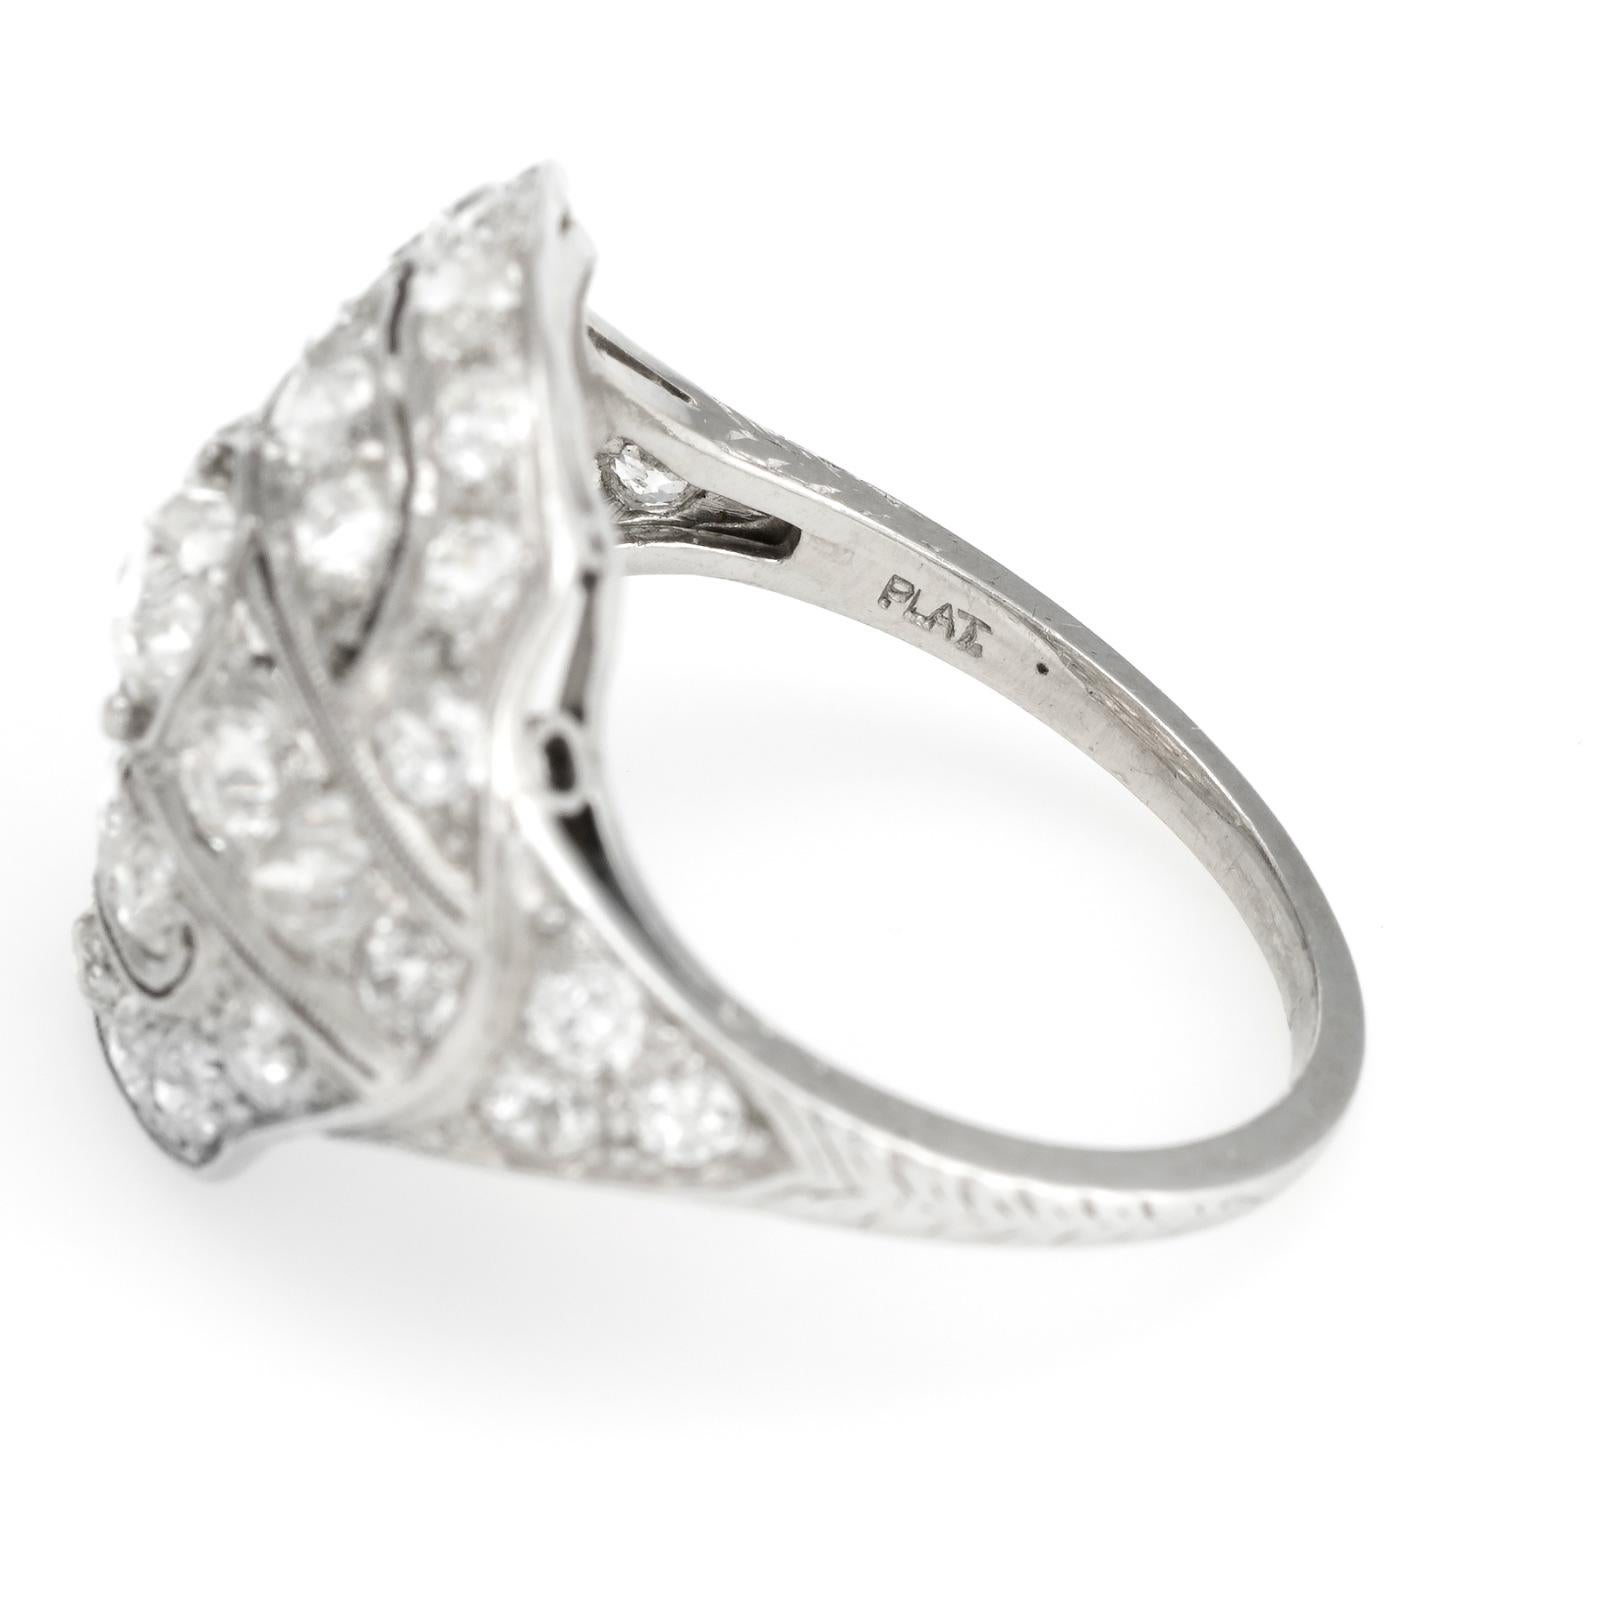 Vintage Art Deco 2.25 Carat Diamond Ring Platinum Fine Jewelry Heirloom For Sale 1